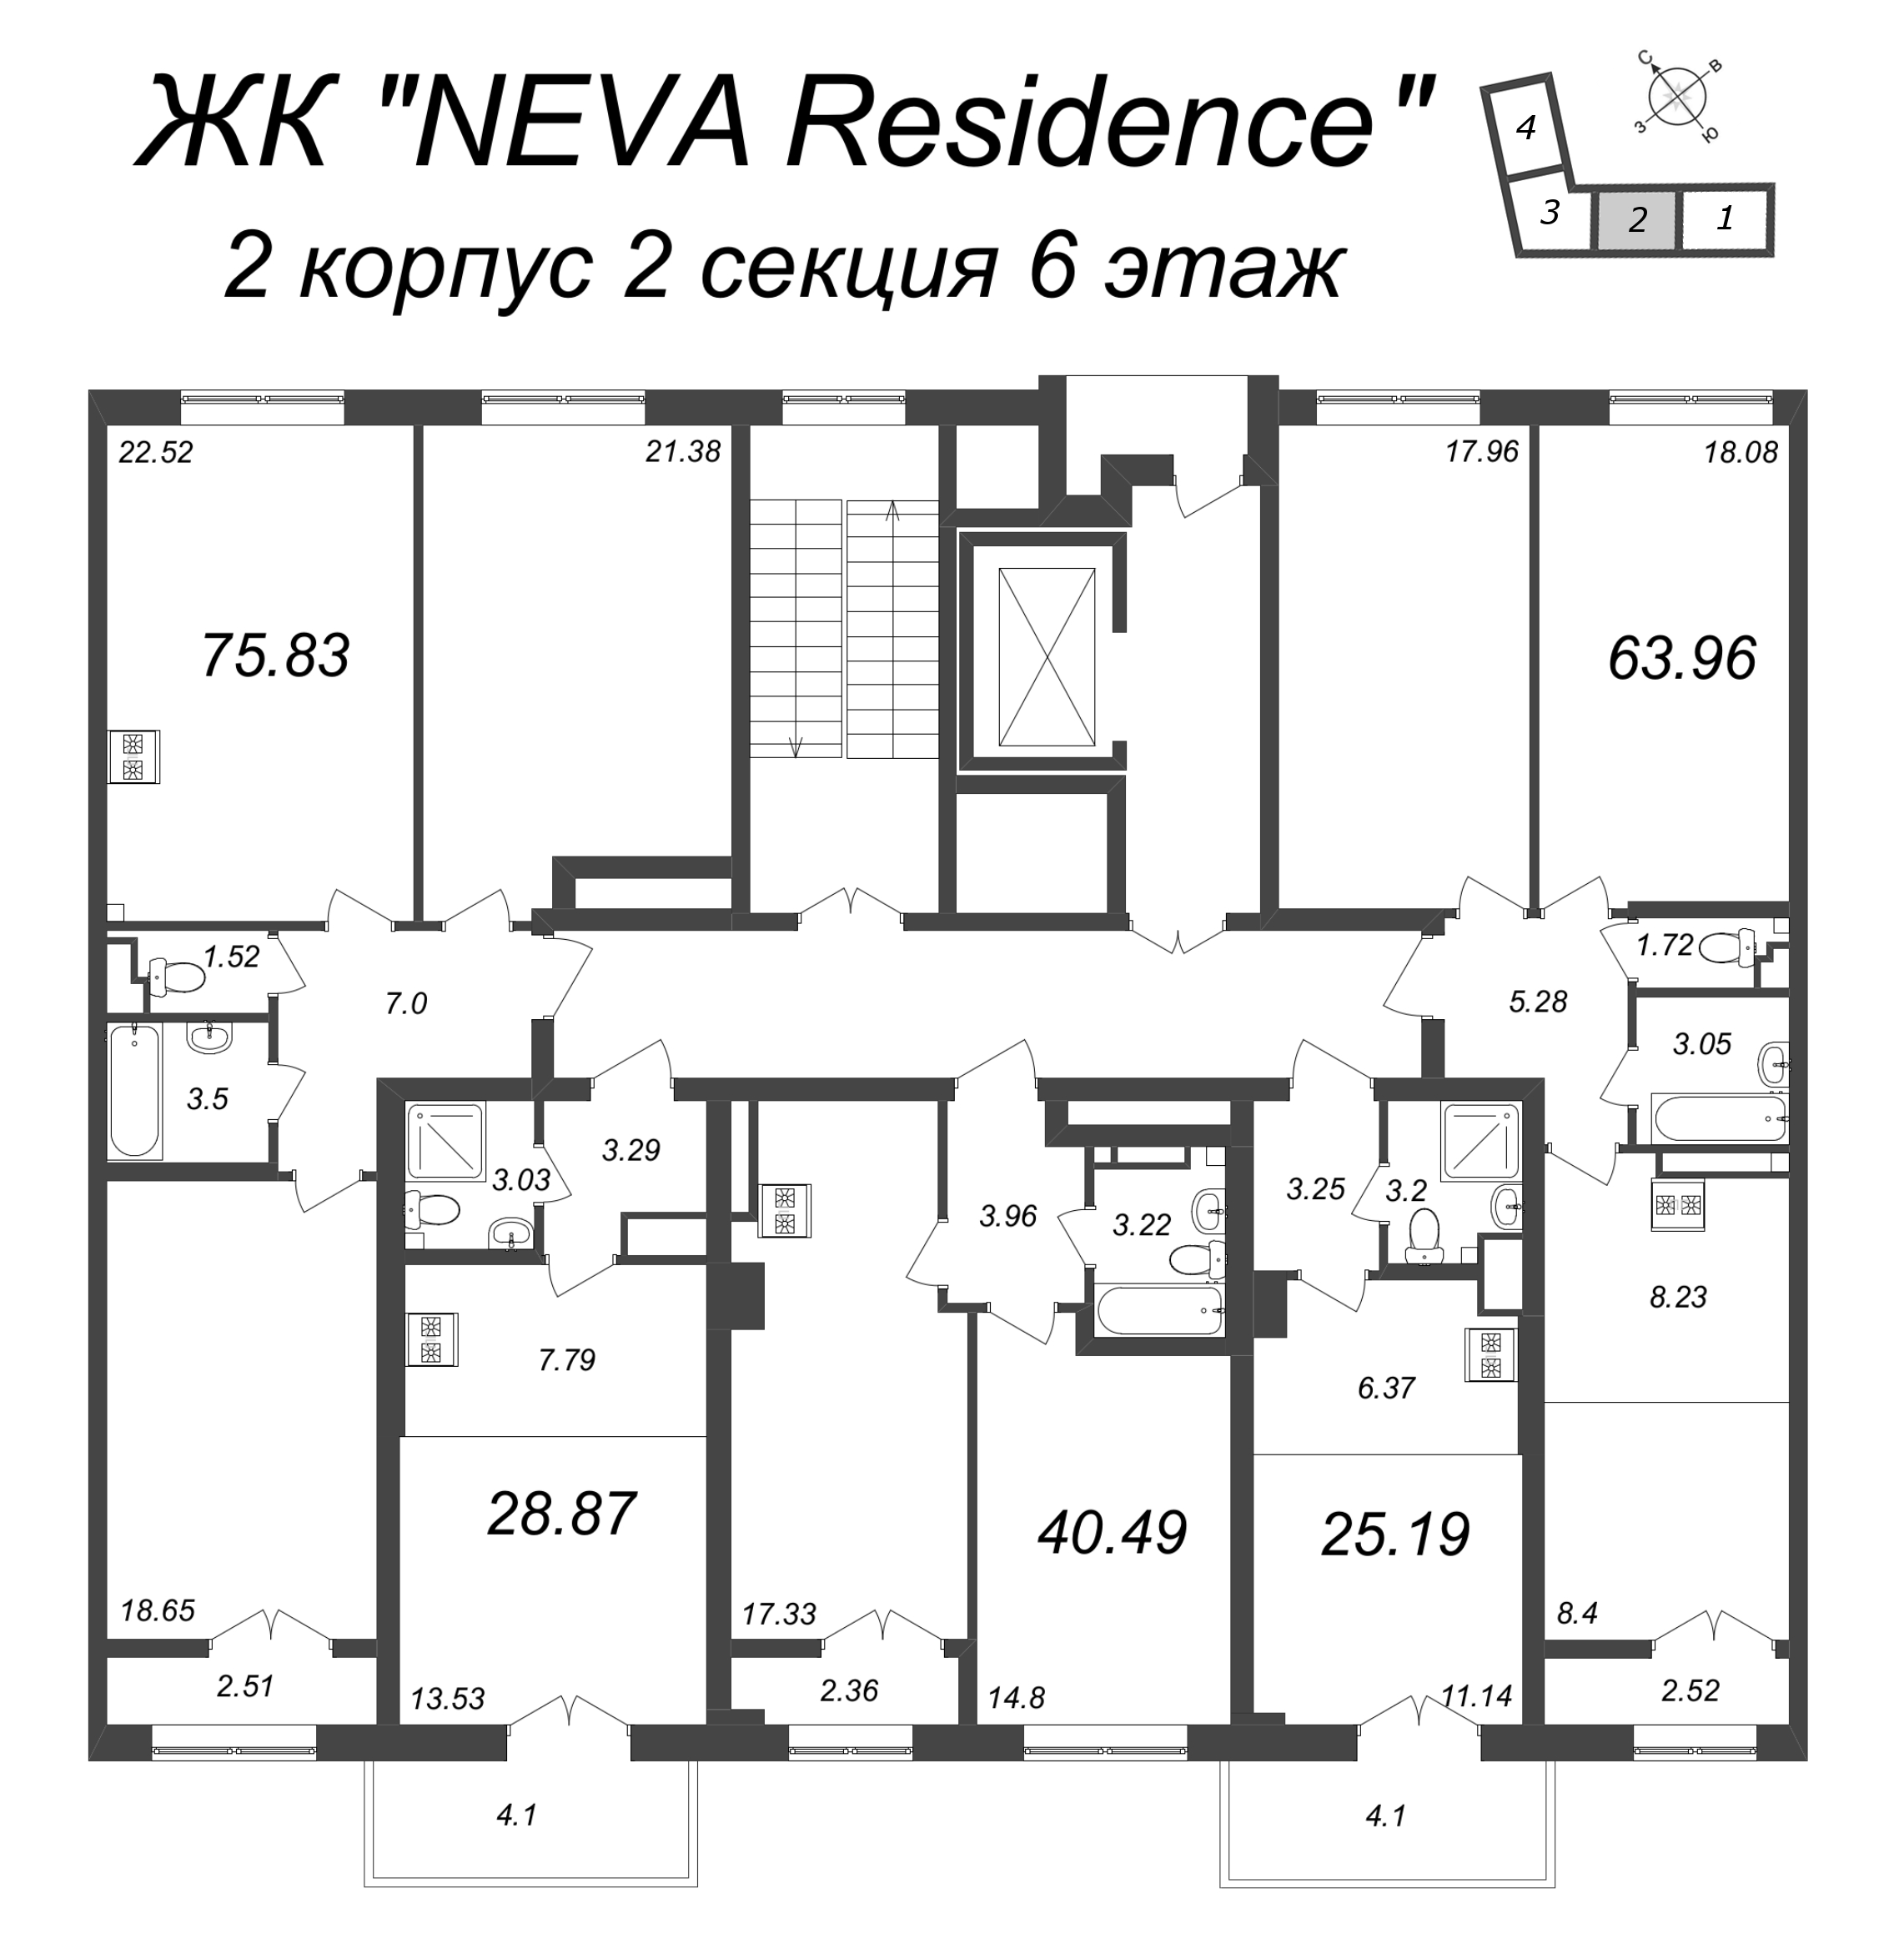 2-комнатная (Евро) квартира, 40.49 м² - планировка этажа